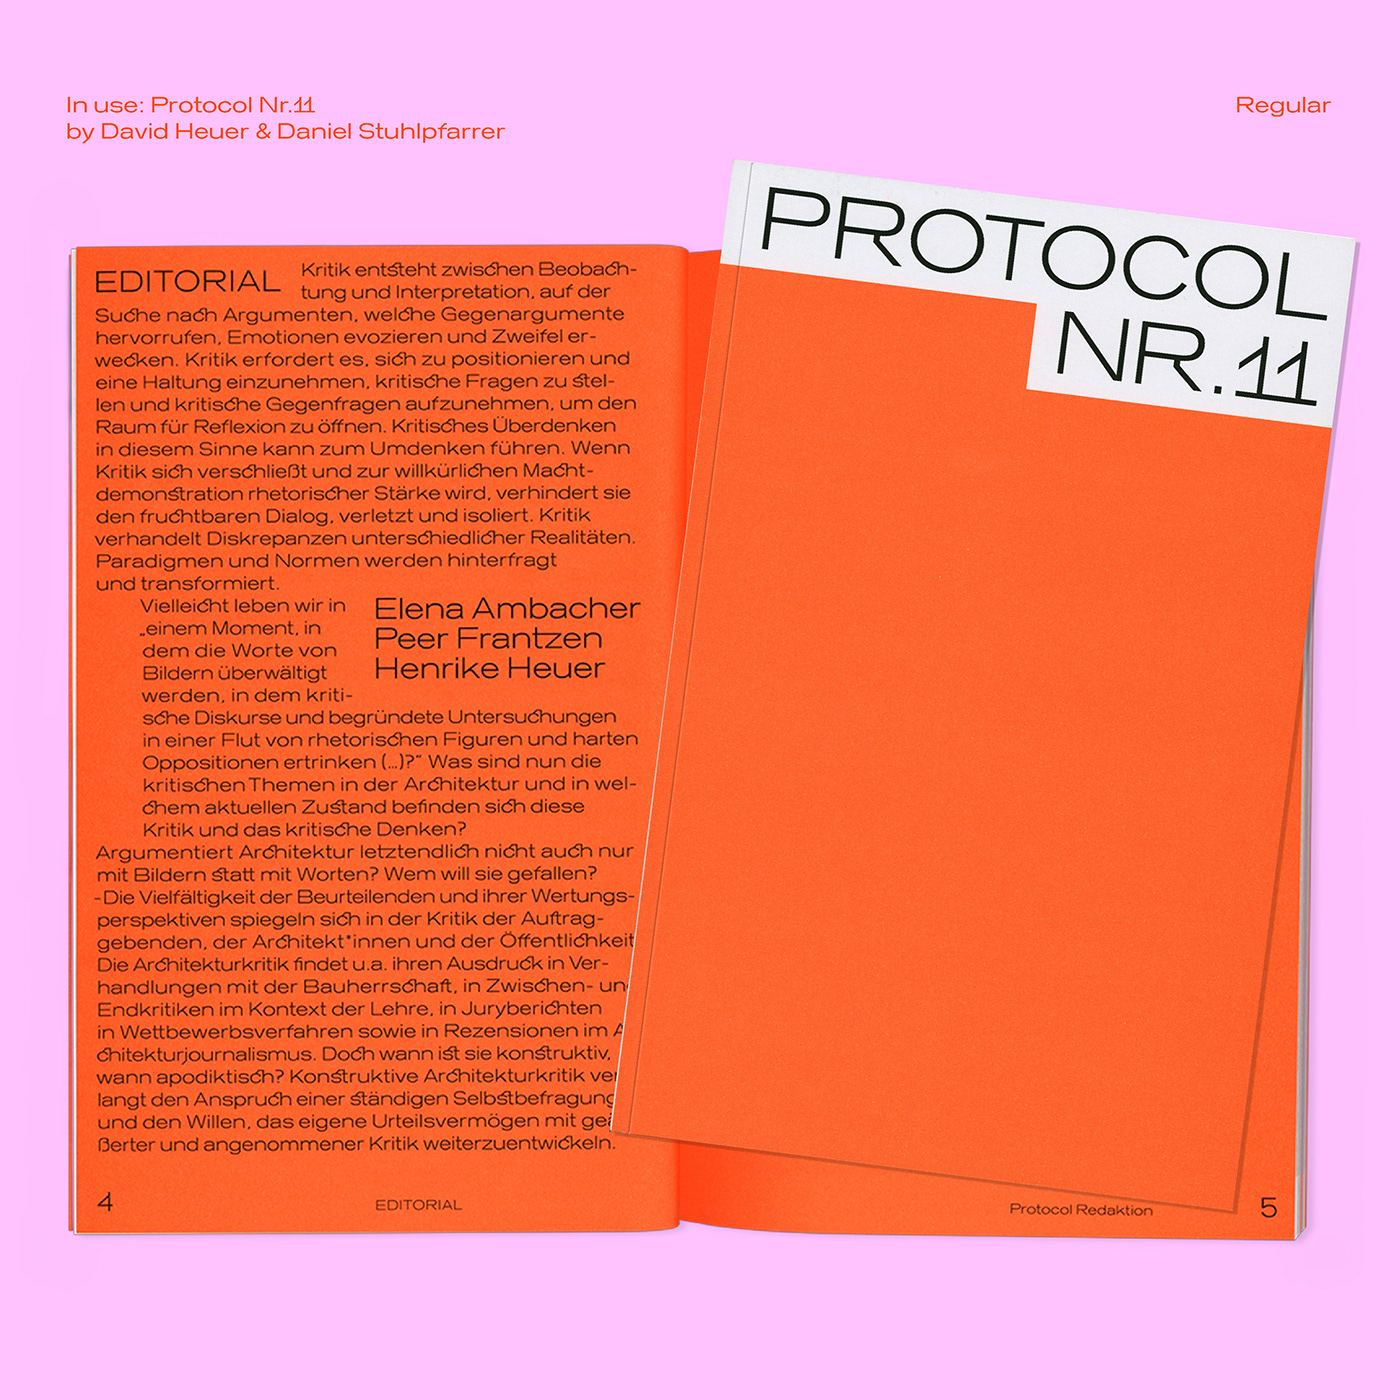 Kritik in use: Protocol Magazine Nr. 11 by David Heuer & Daniel Stuhlpfarrer